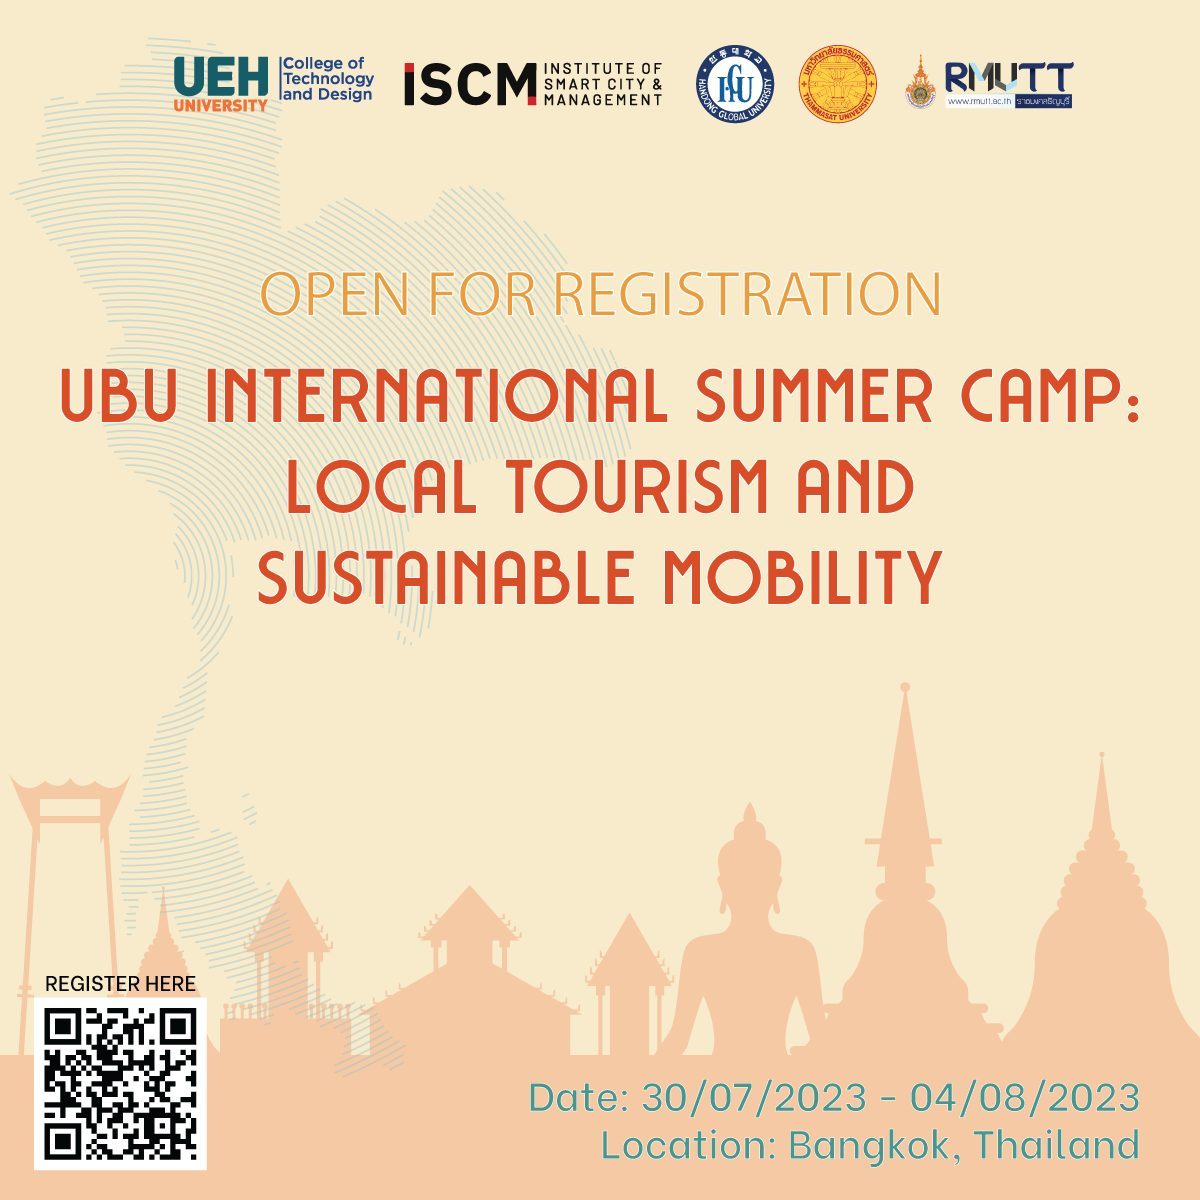 UBU INTERNATIONAL SUMMER CAMP: LOCAL TOURISM AND SUSTAINABLE MOBILITY - BANGKOK, THAILAND